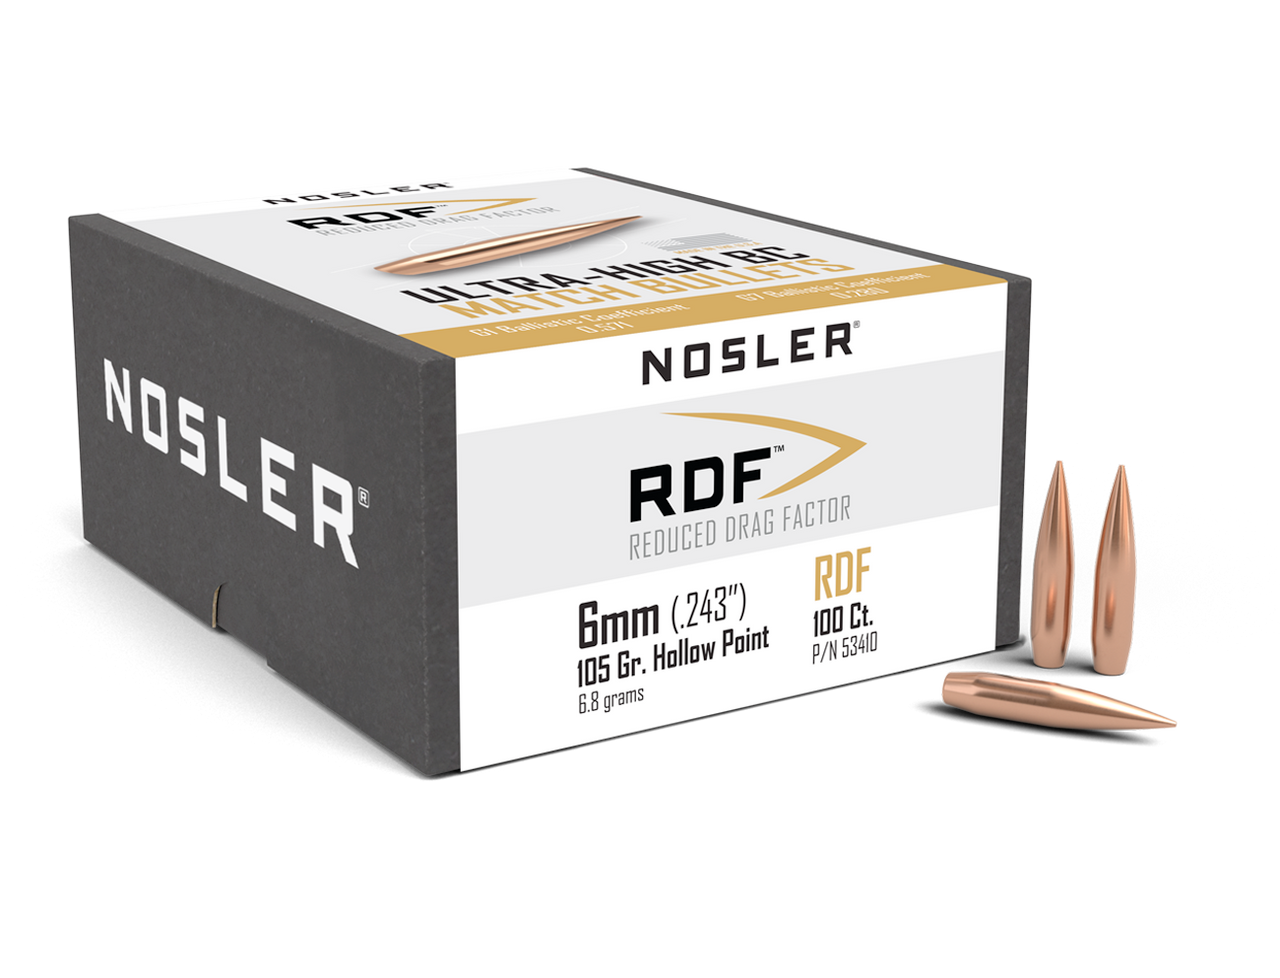 Nosler RDF Reduced Drag Factor Rifle Bullets 6mm, 105gr HPBT Bullets, Box of 100